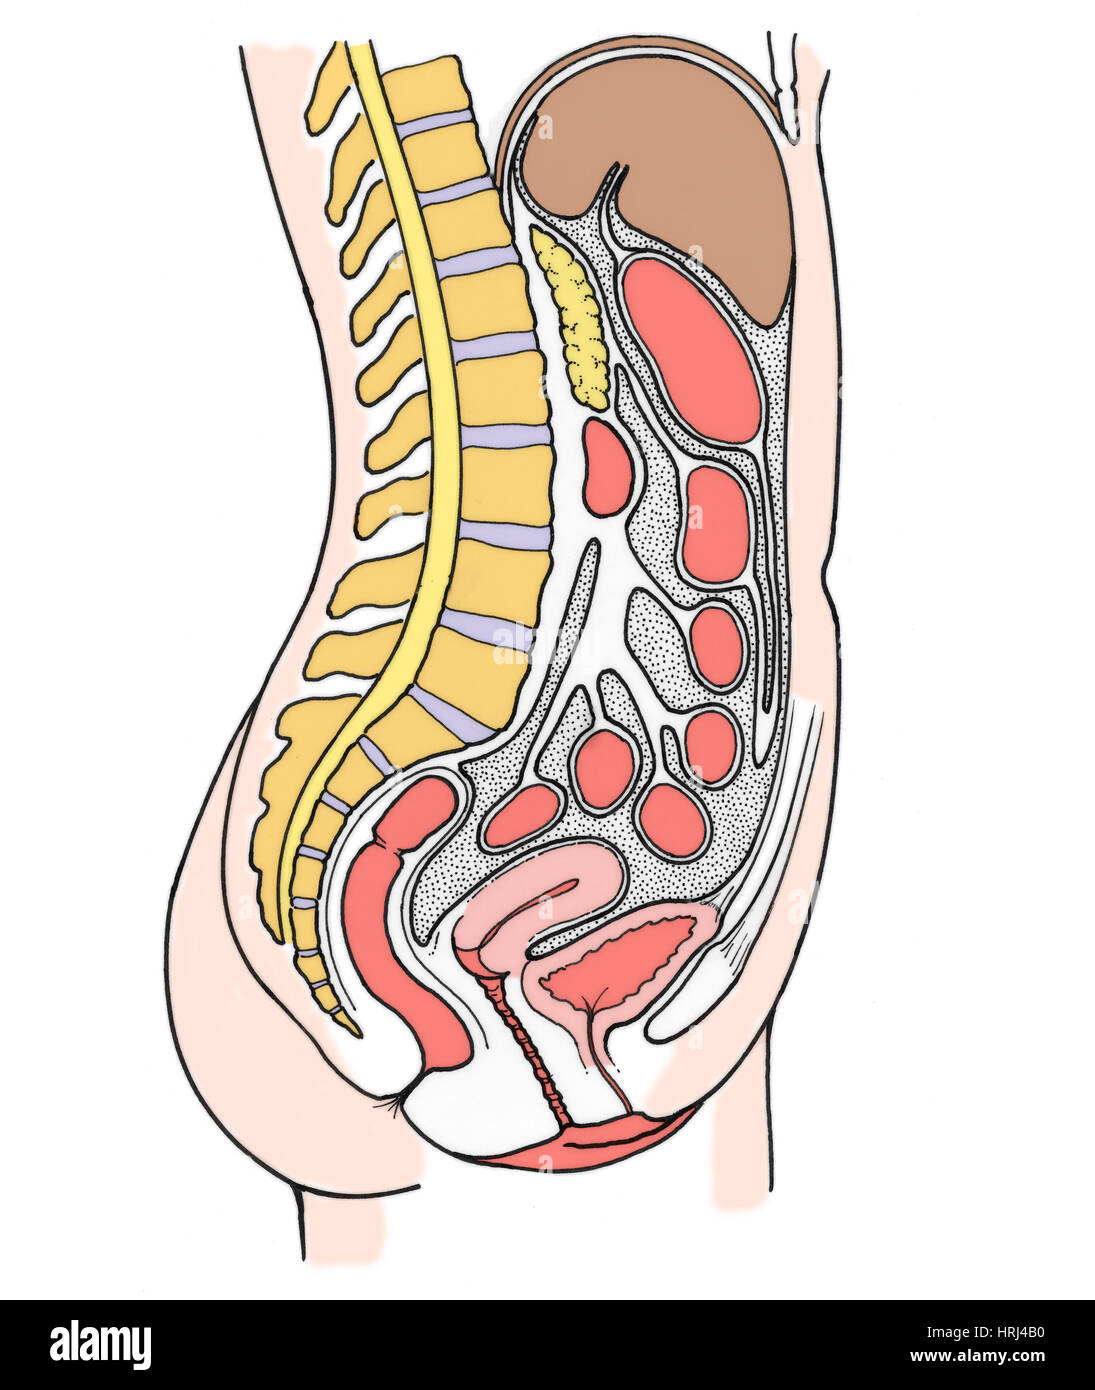 Illustration Of Female Internal Organs Stock Photo Alamy